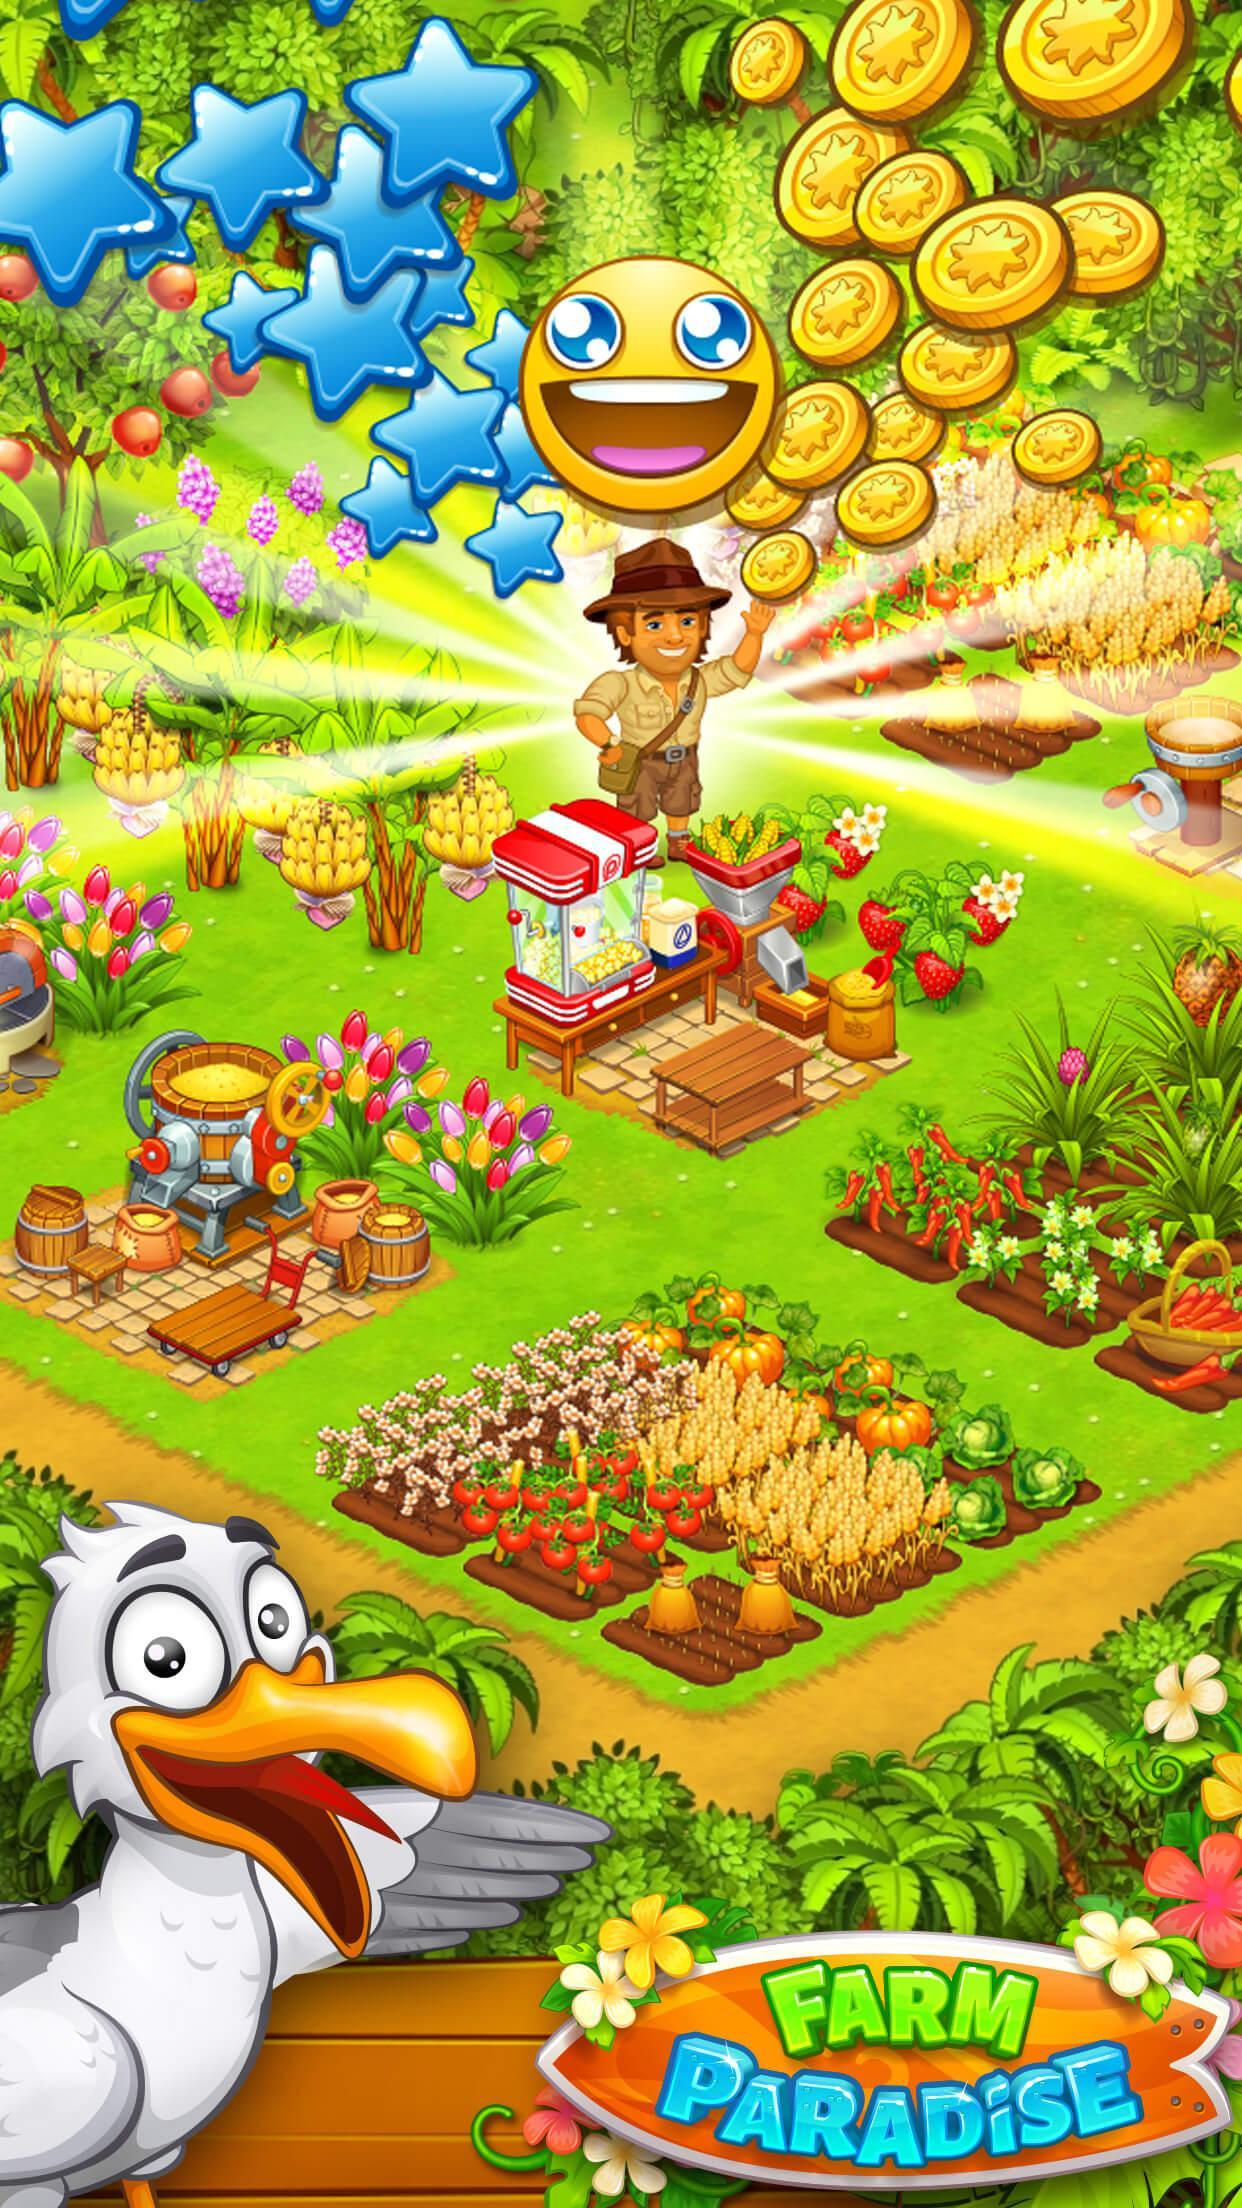 Farm Paradise Fun farm trade game at lost island 2.17 Screenshot 19